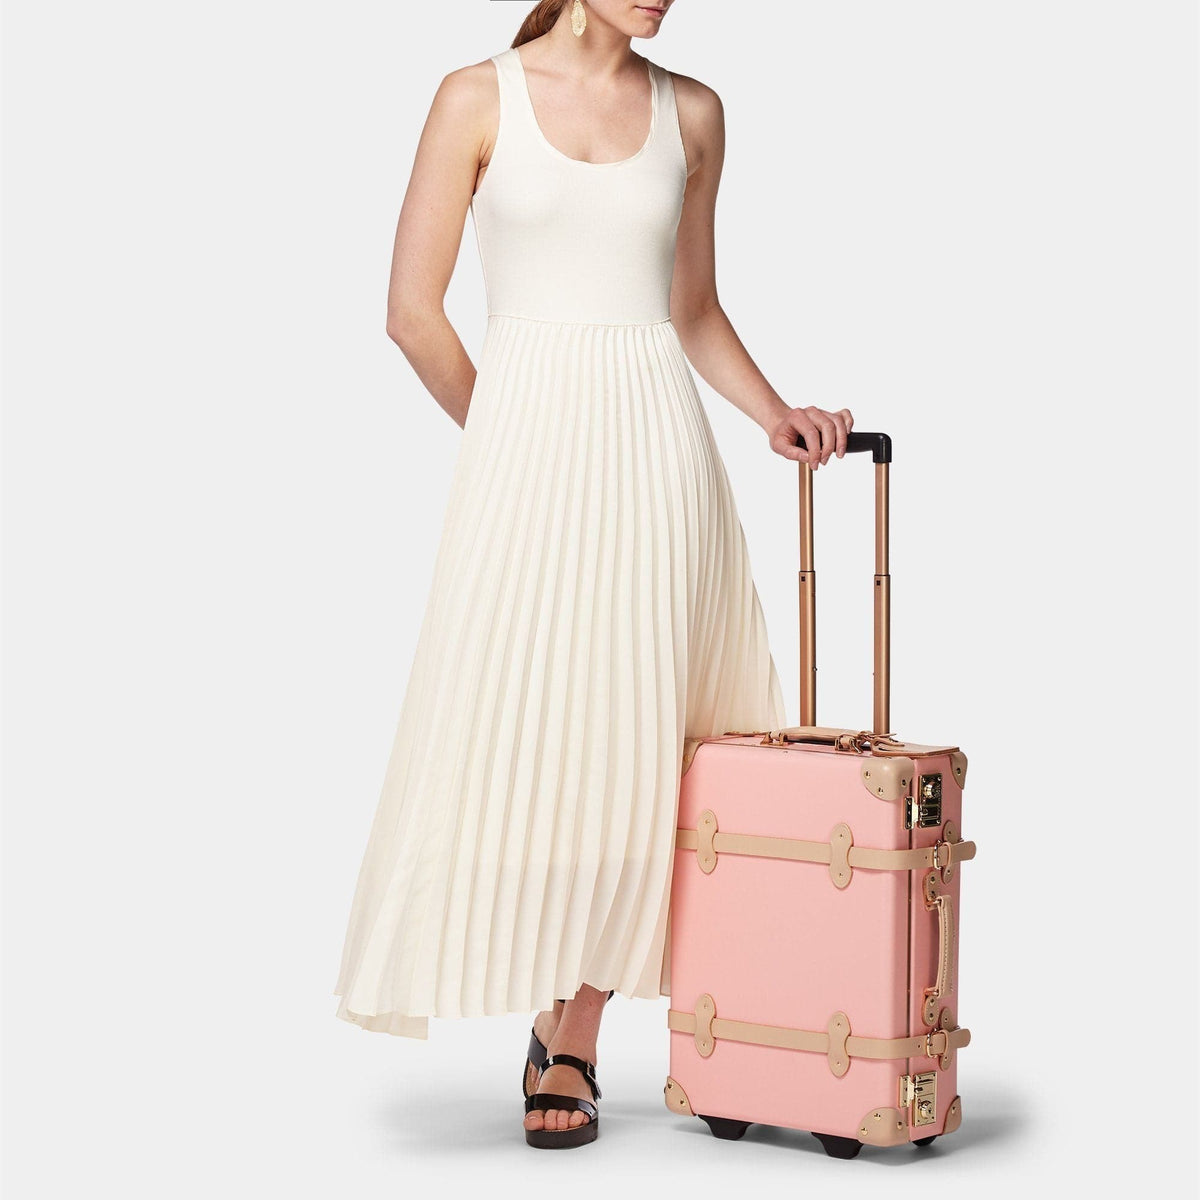 Steamline Luggage The Entrepreneur Briefcase in Pink